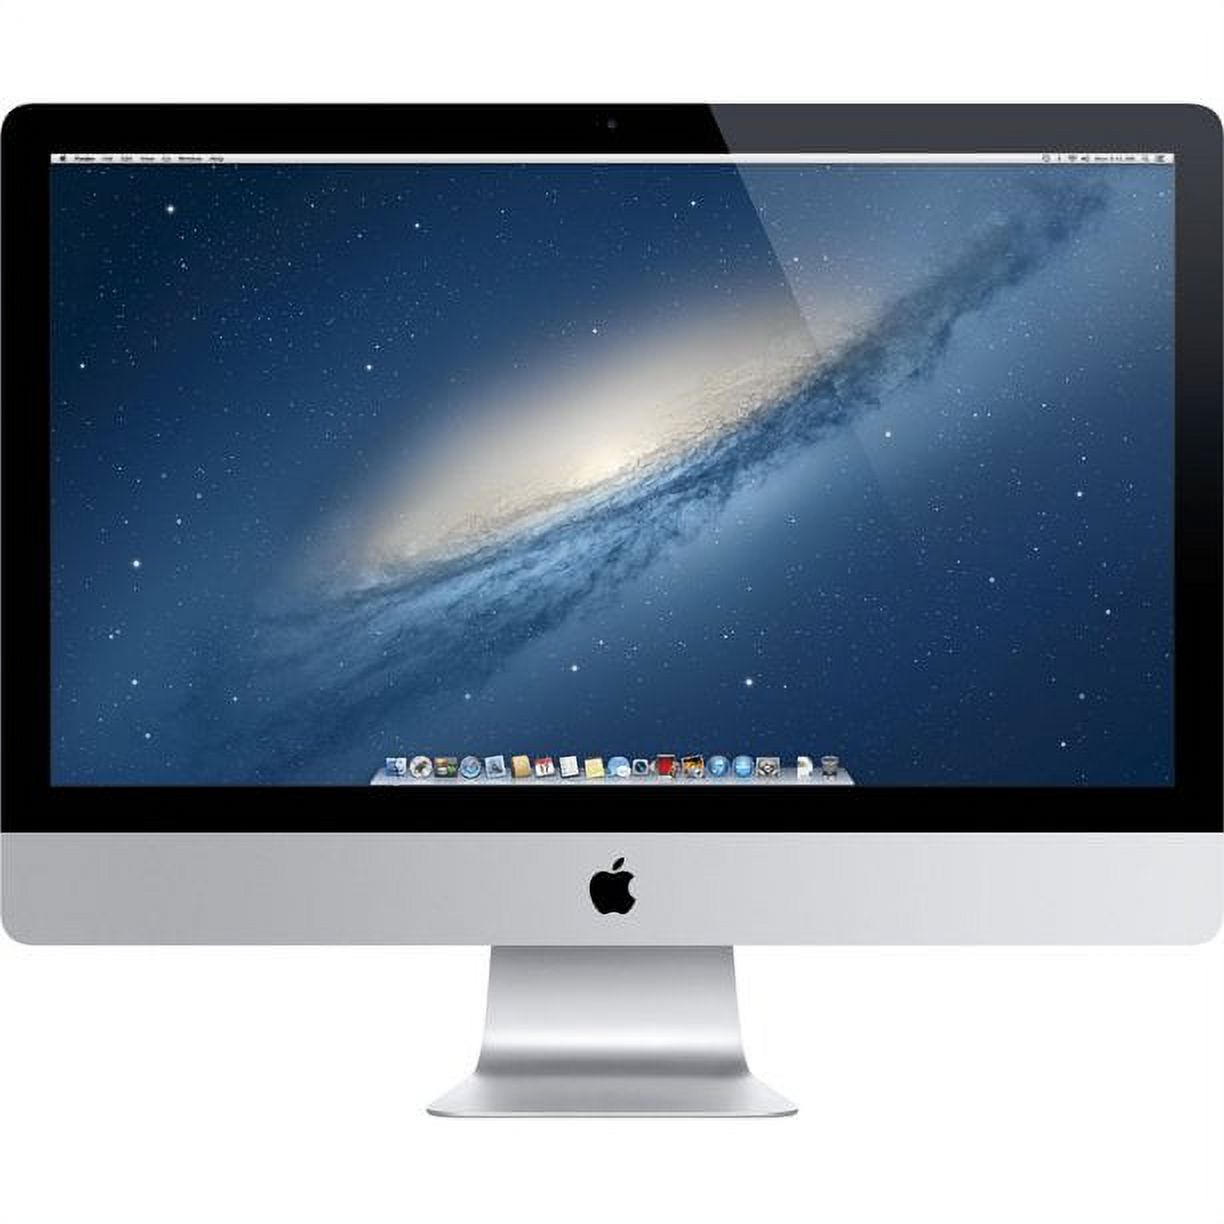 Restored Apple 21.5" Full HD Display iMac 2.7 GHz i5 Quad-Core 8GB Ram 1T HD - ME086LL/A (Refurbished) - image 1 of 5